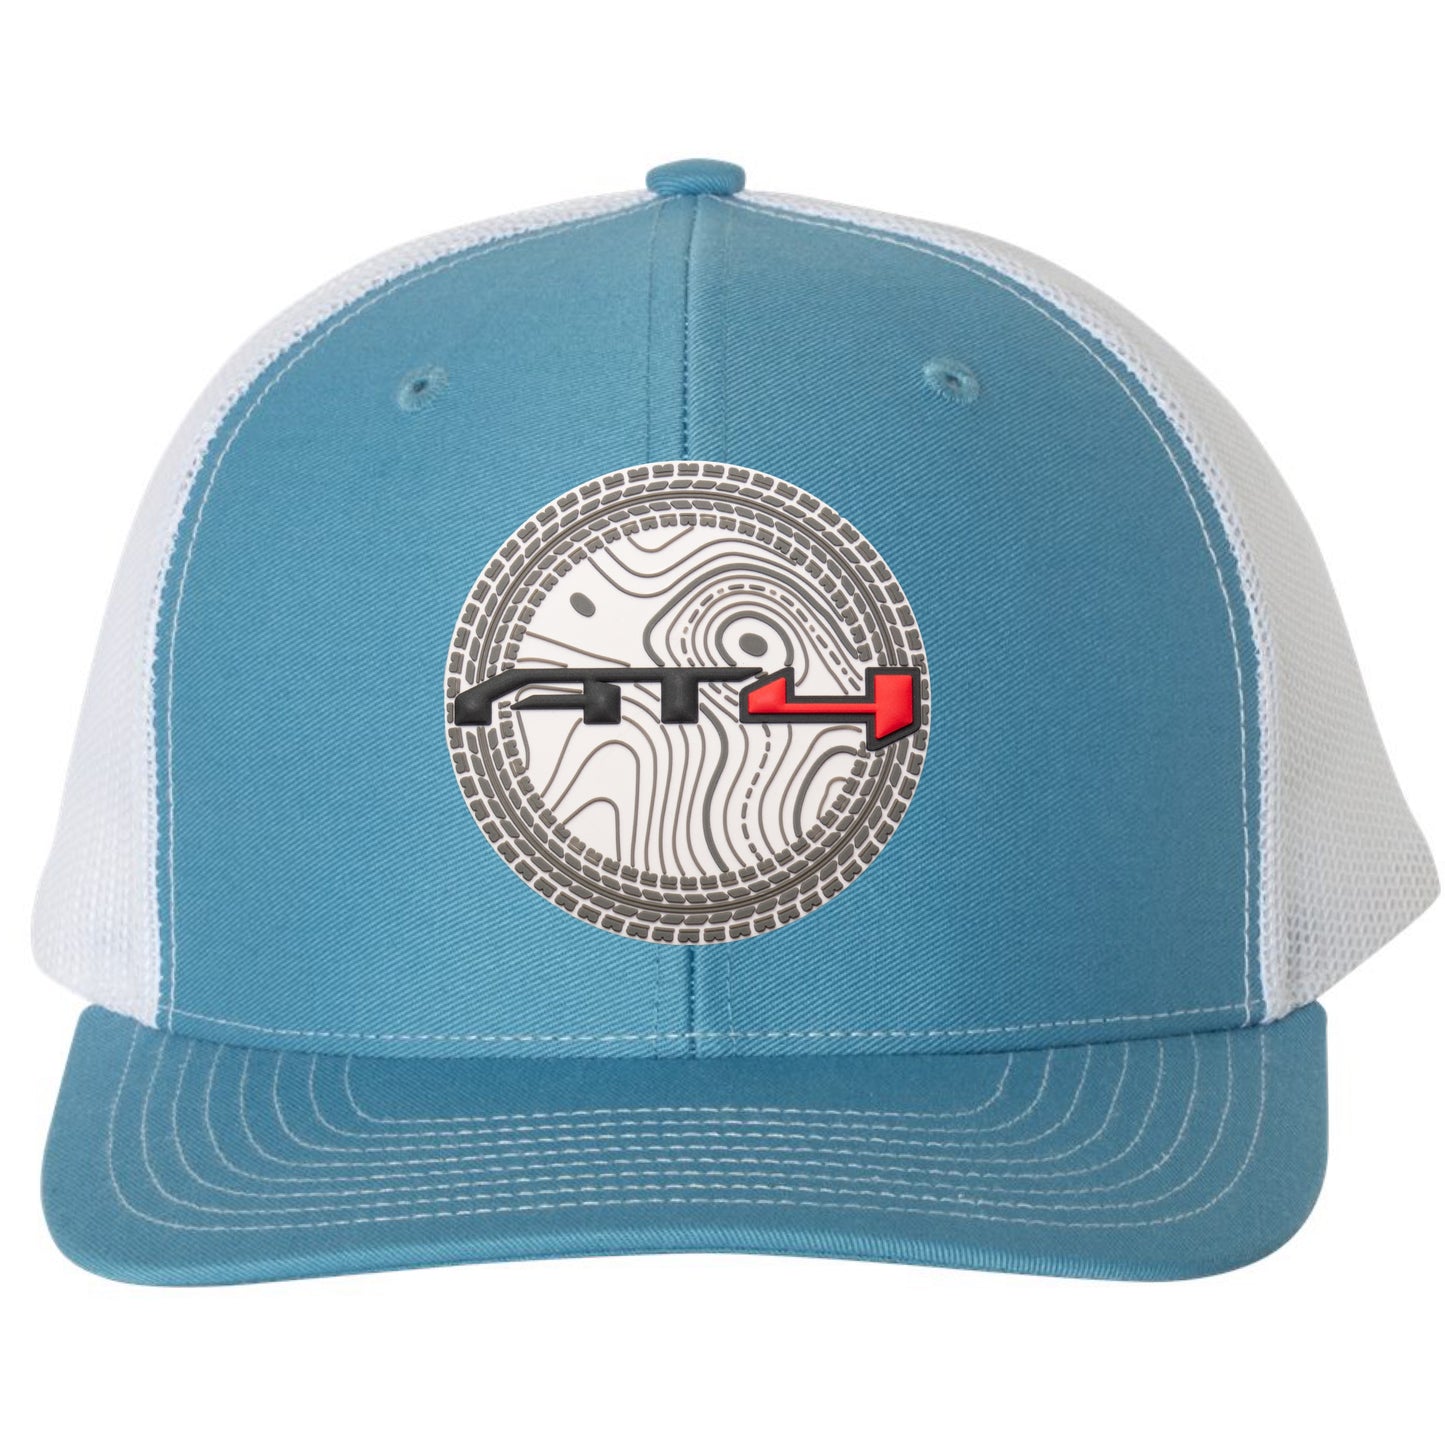 AT4 Snapback Trucker Hat- Columbia Blue/ White - Ten Gallon Hat Co.